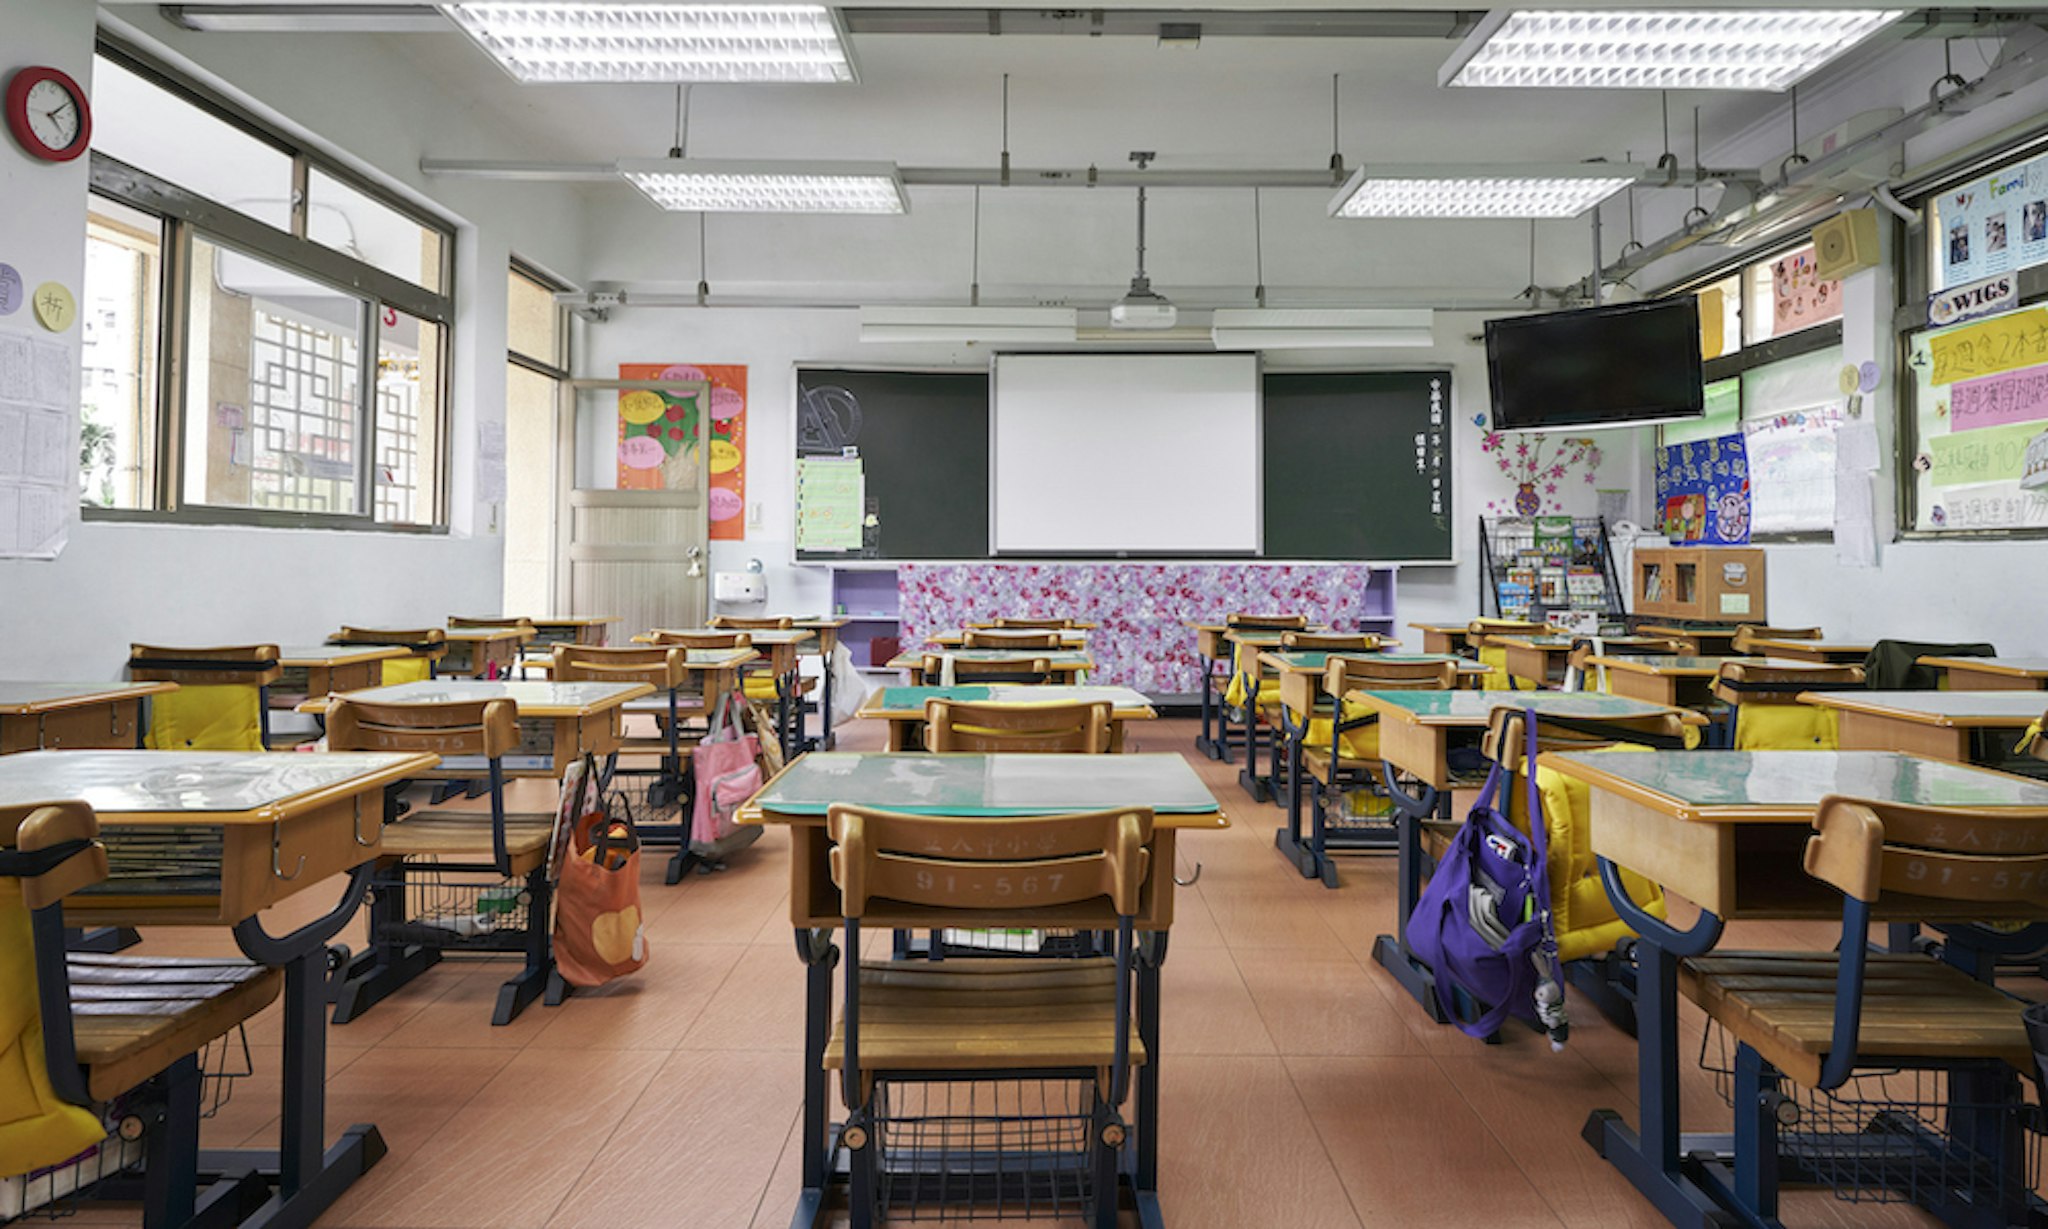 Row of empty desks in front of whiteboard. Interior of classroom in school.